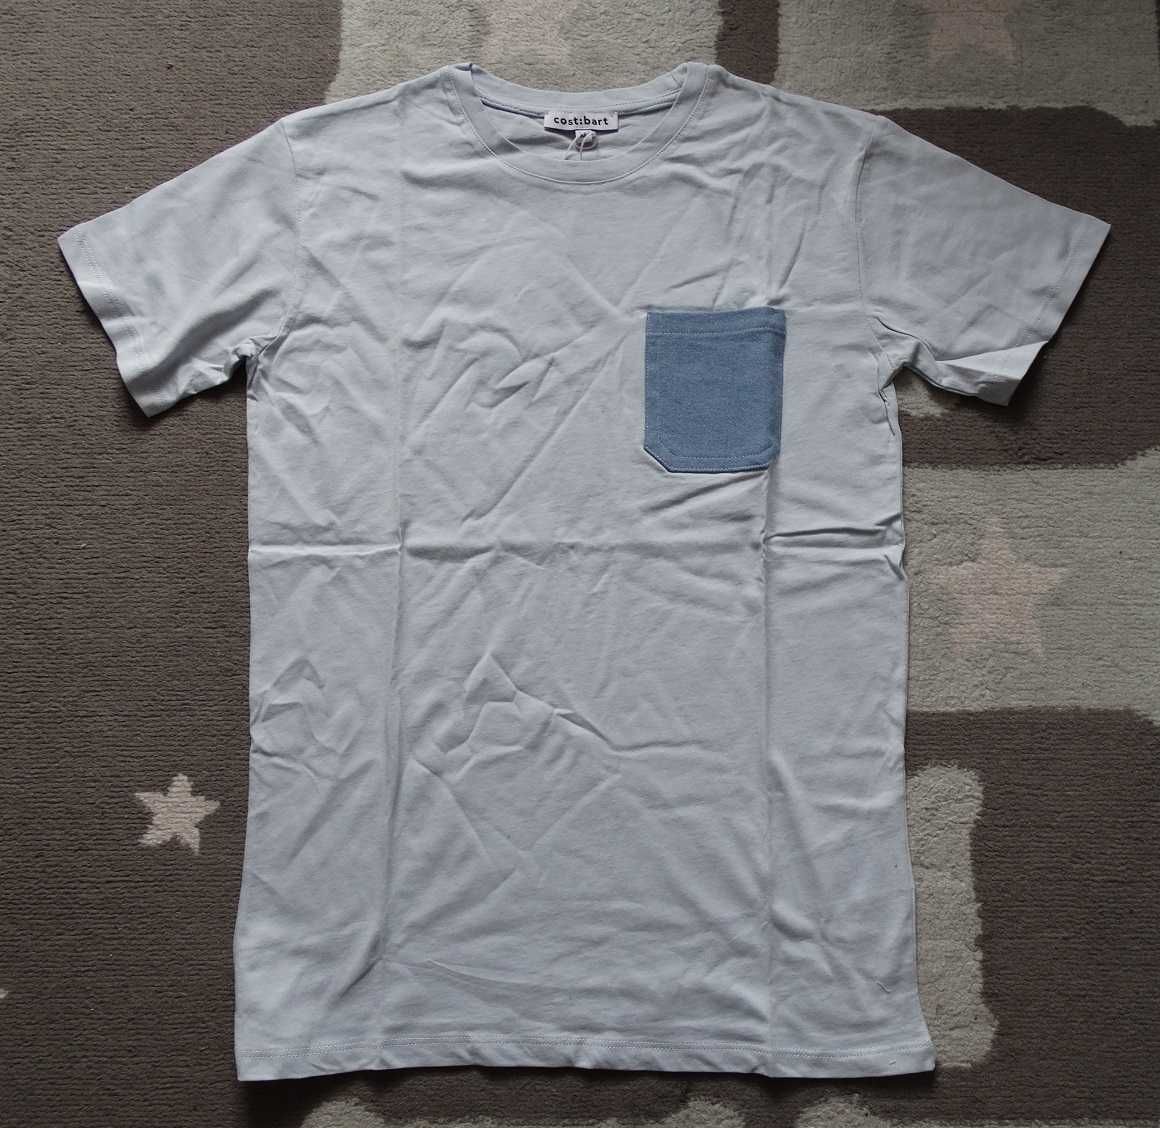 Nowa koszulka Cost:bart rozm. 170/176cm XL